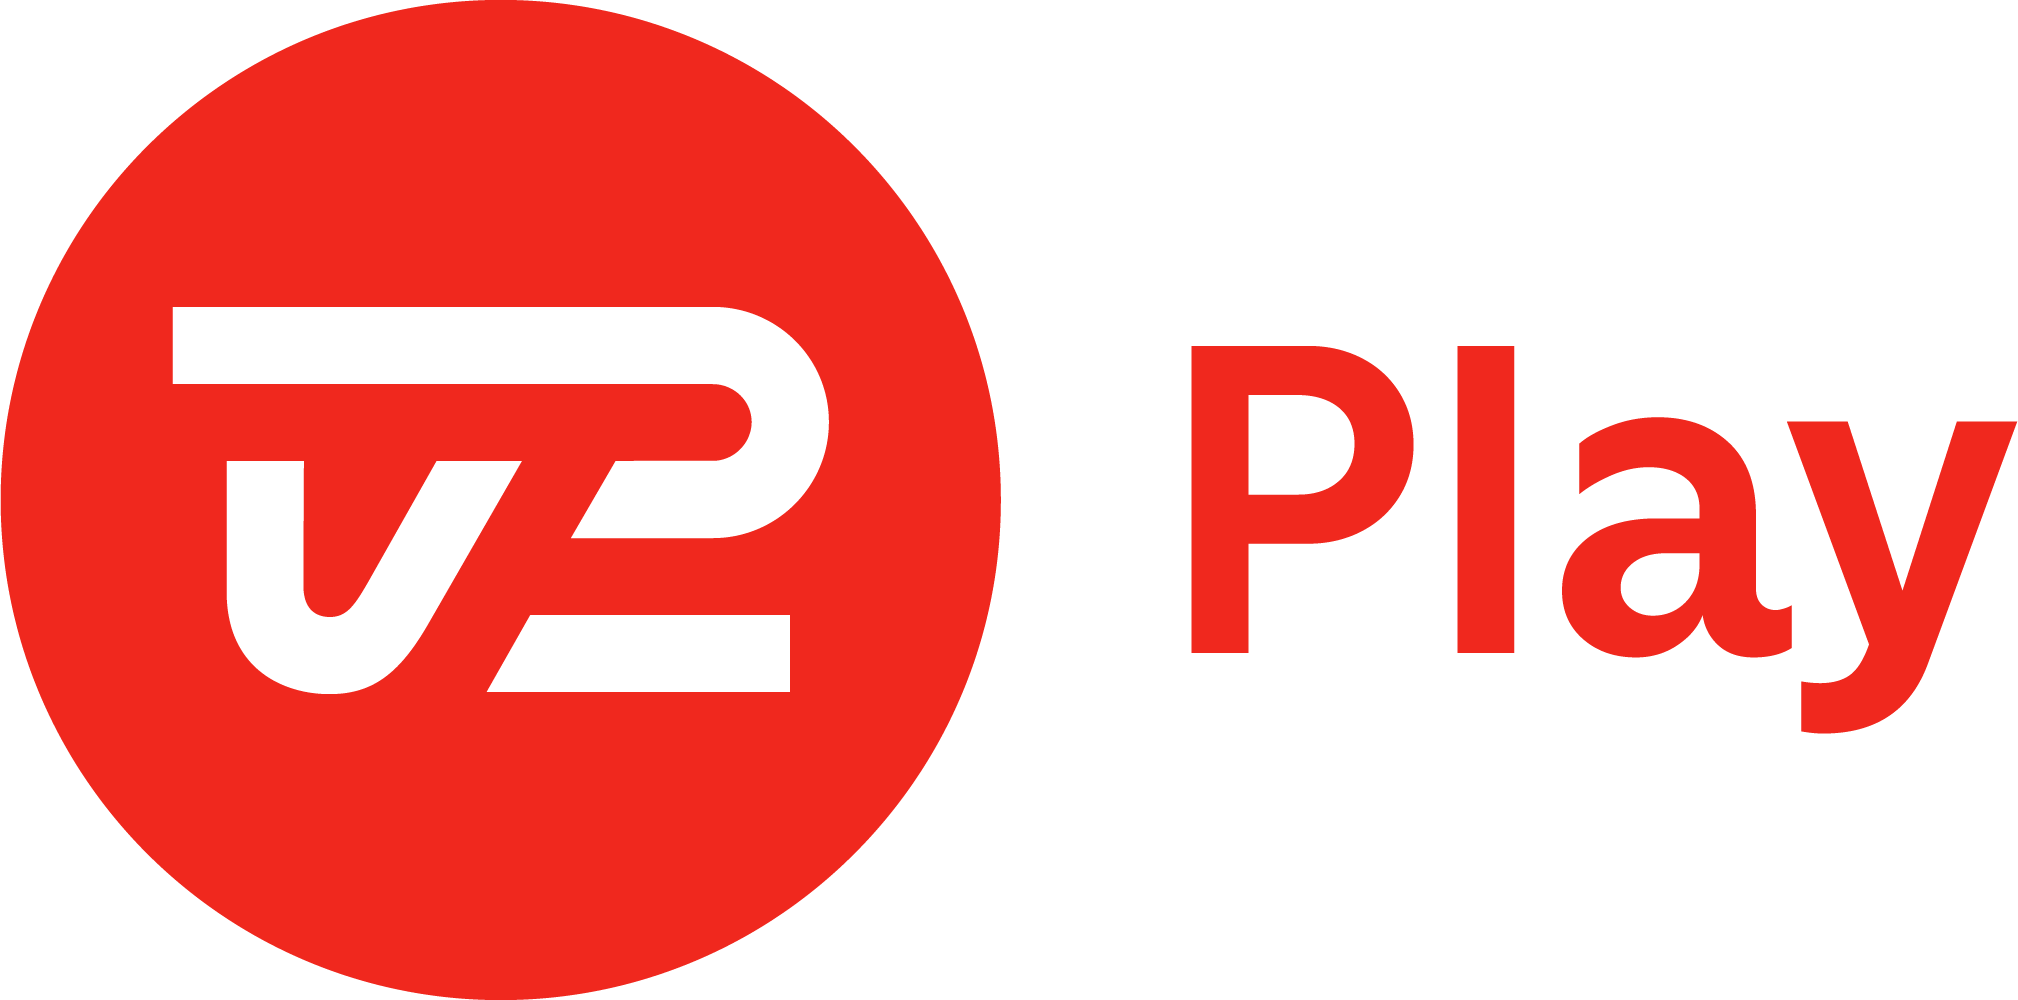 TV2 Play logo